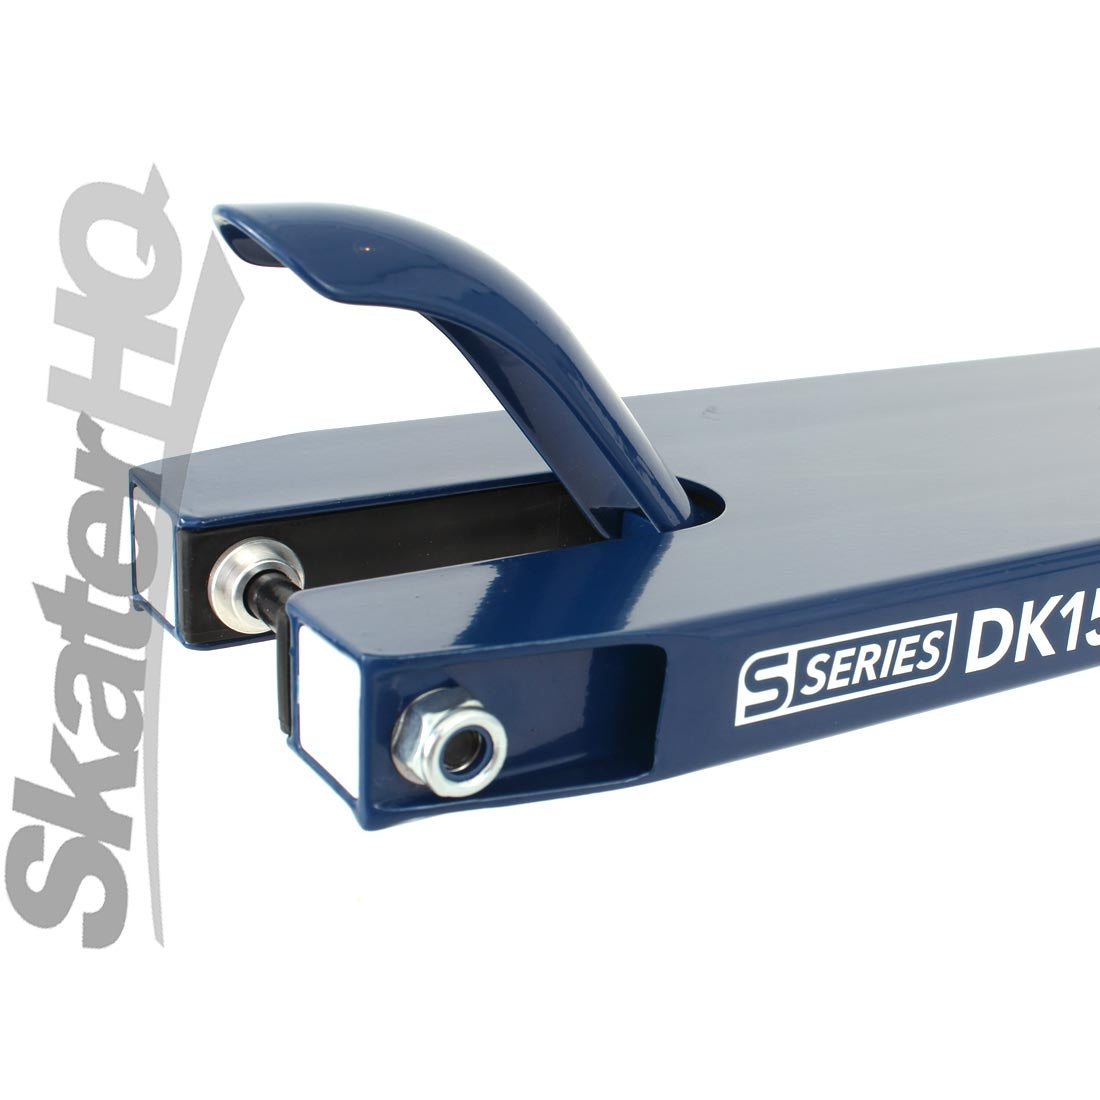 District S-Series DK150i Deck - Marino Scooter Decks